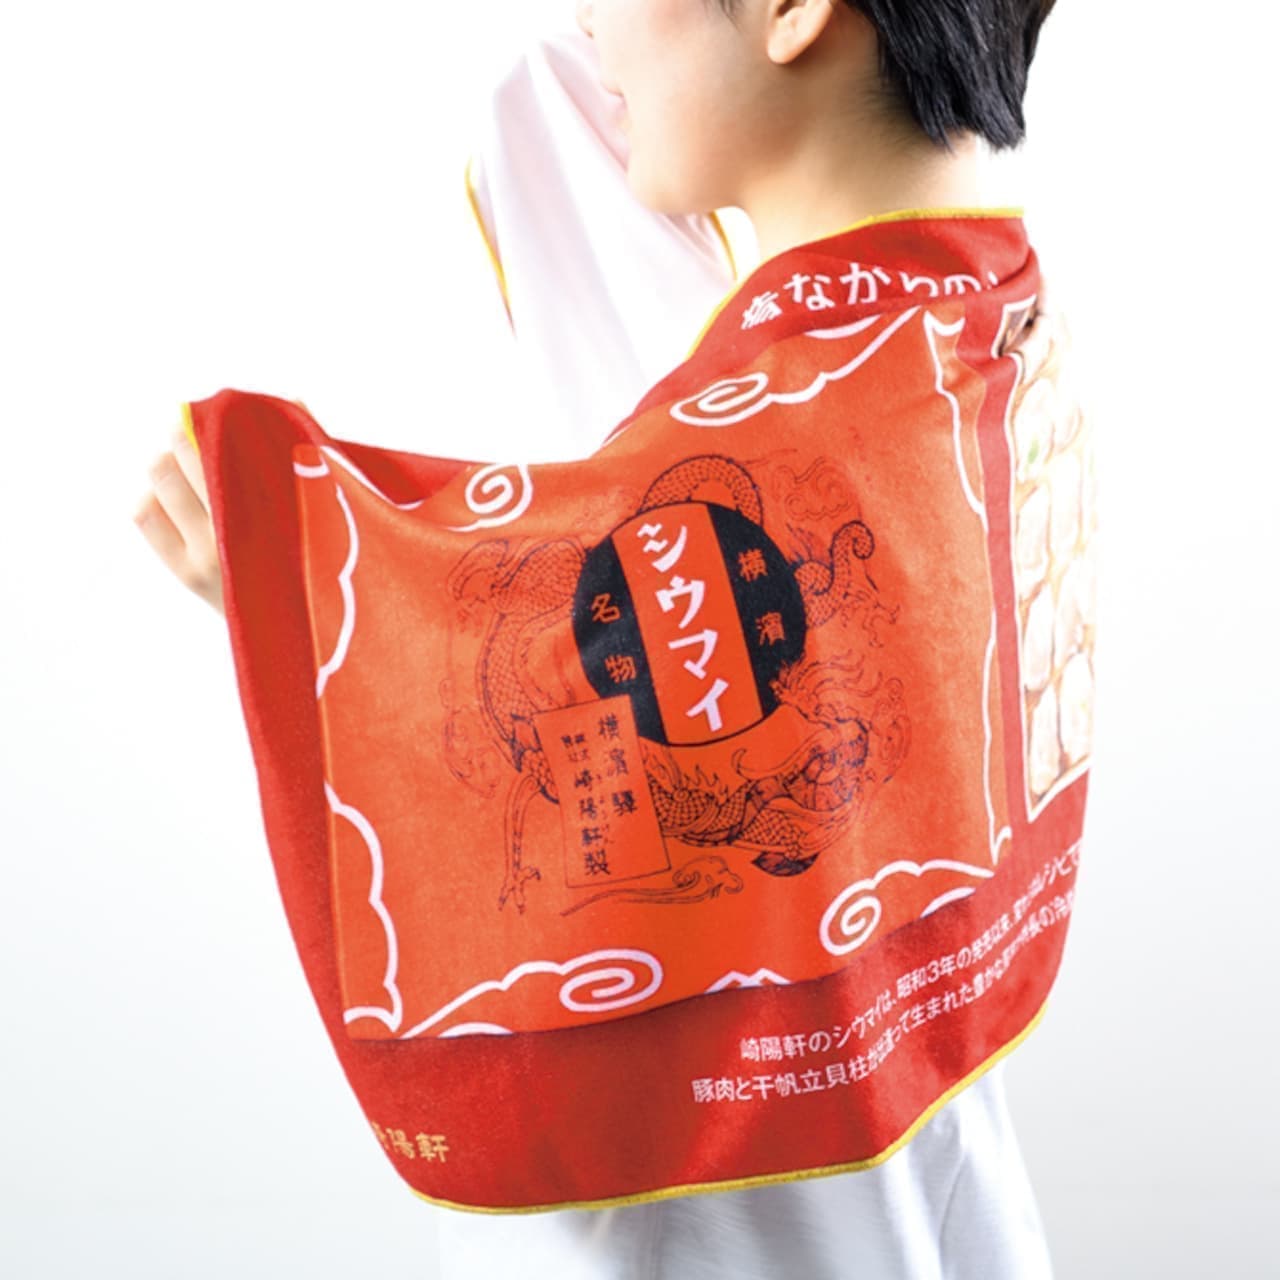 Kiyoken "Old-fashioned shumai cold sports towel" "Old-fashioned shumai dry T-shirt"